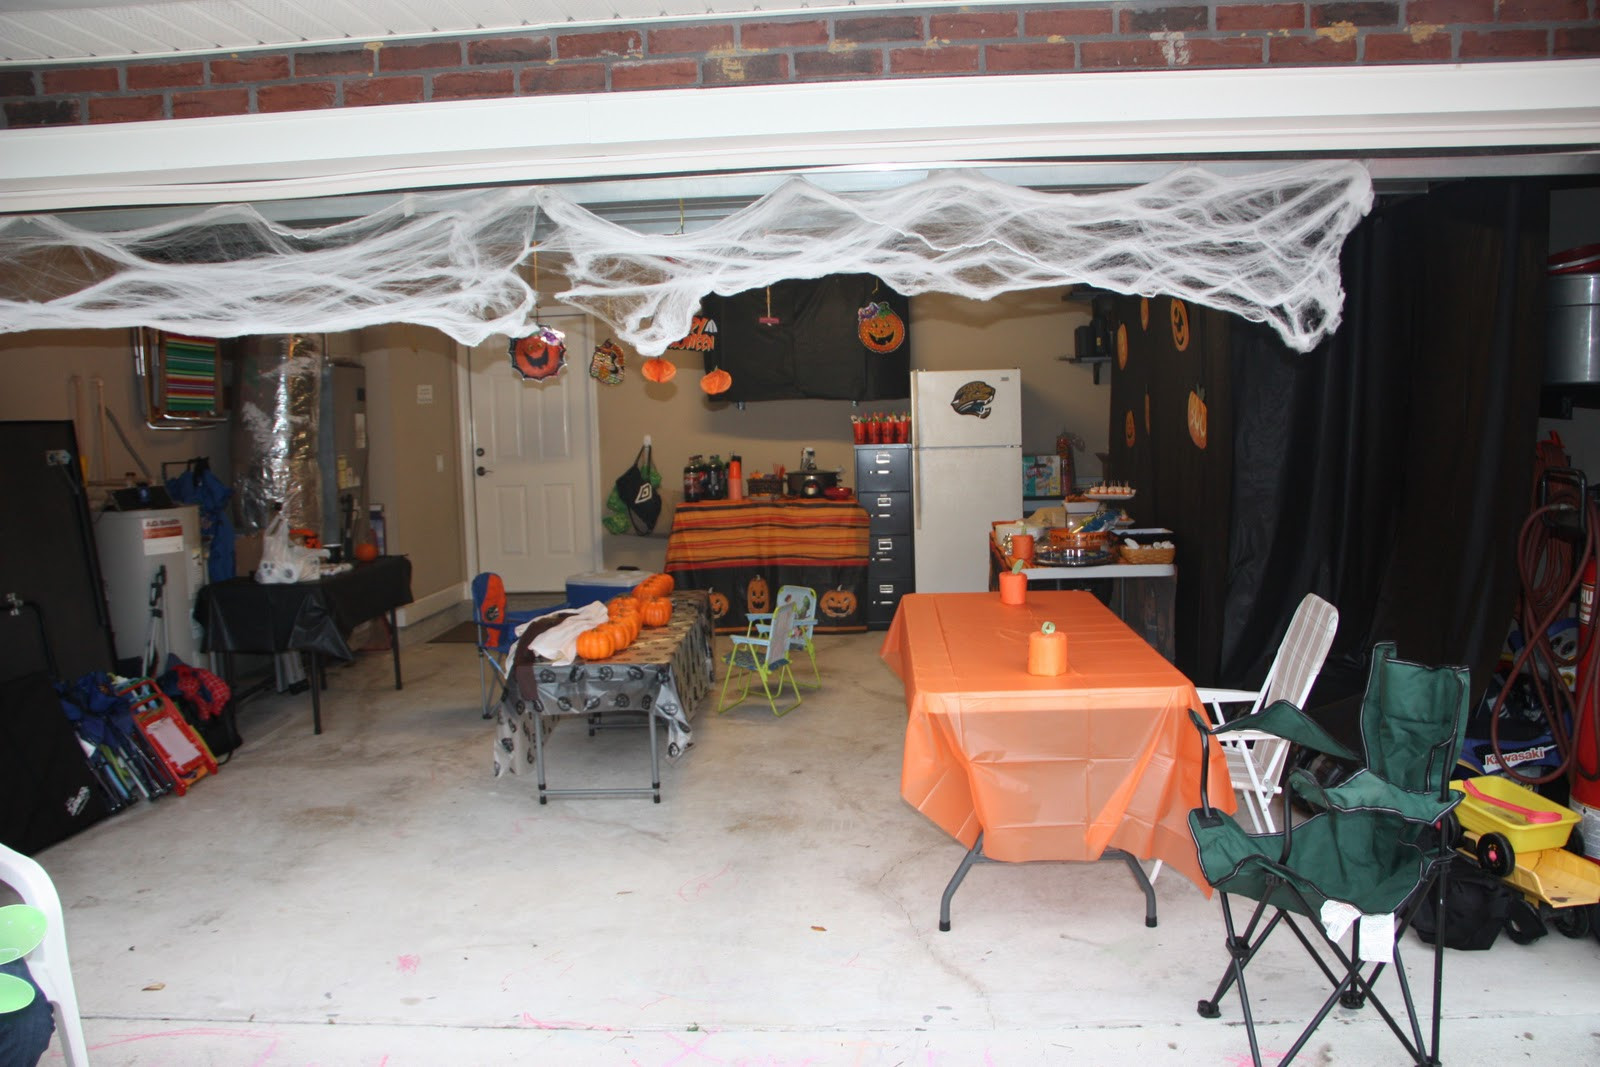 Halloween Garage Party Decorating Ideas
 Garage Party Ideas Home Design Inside